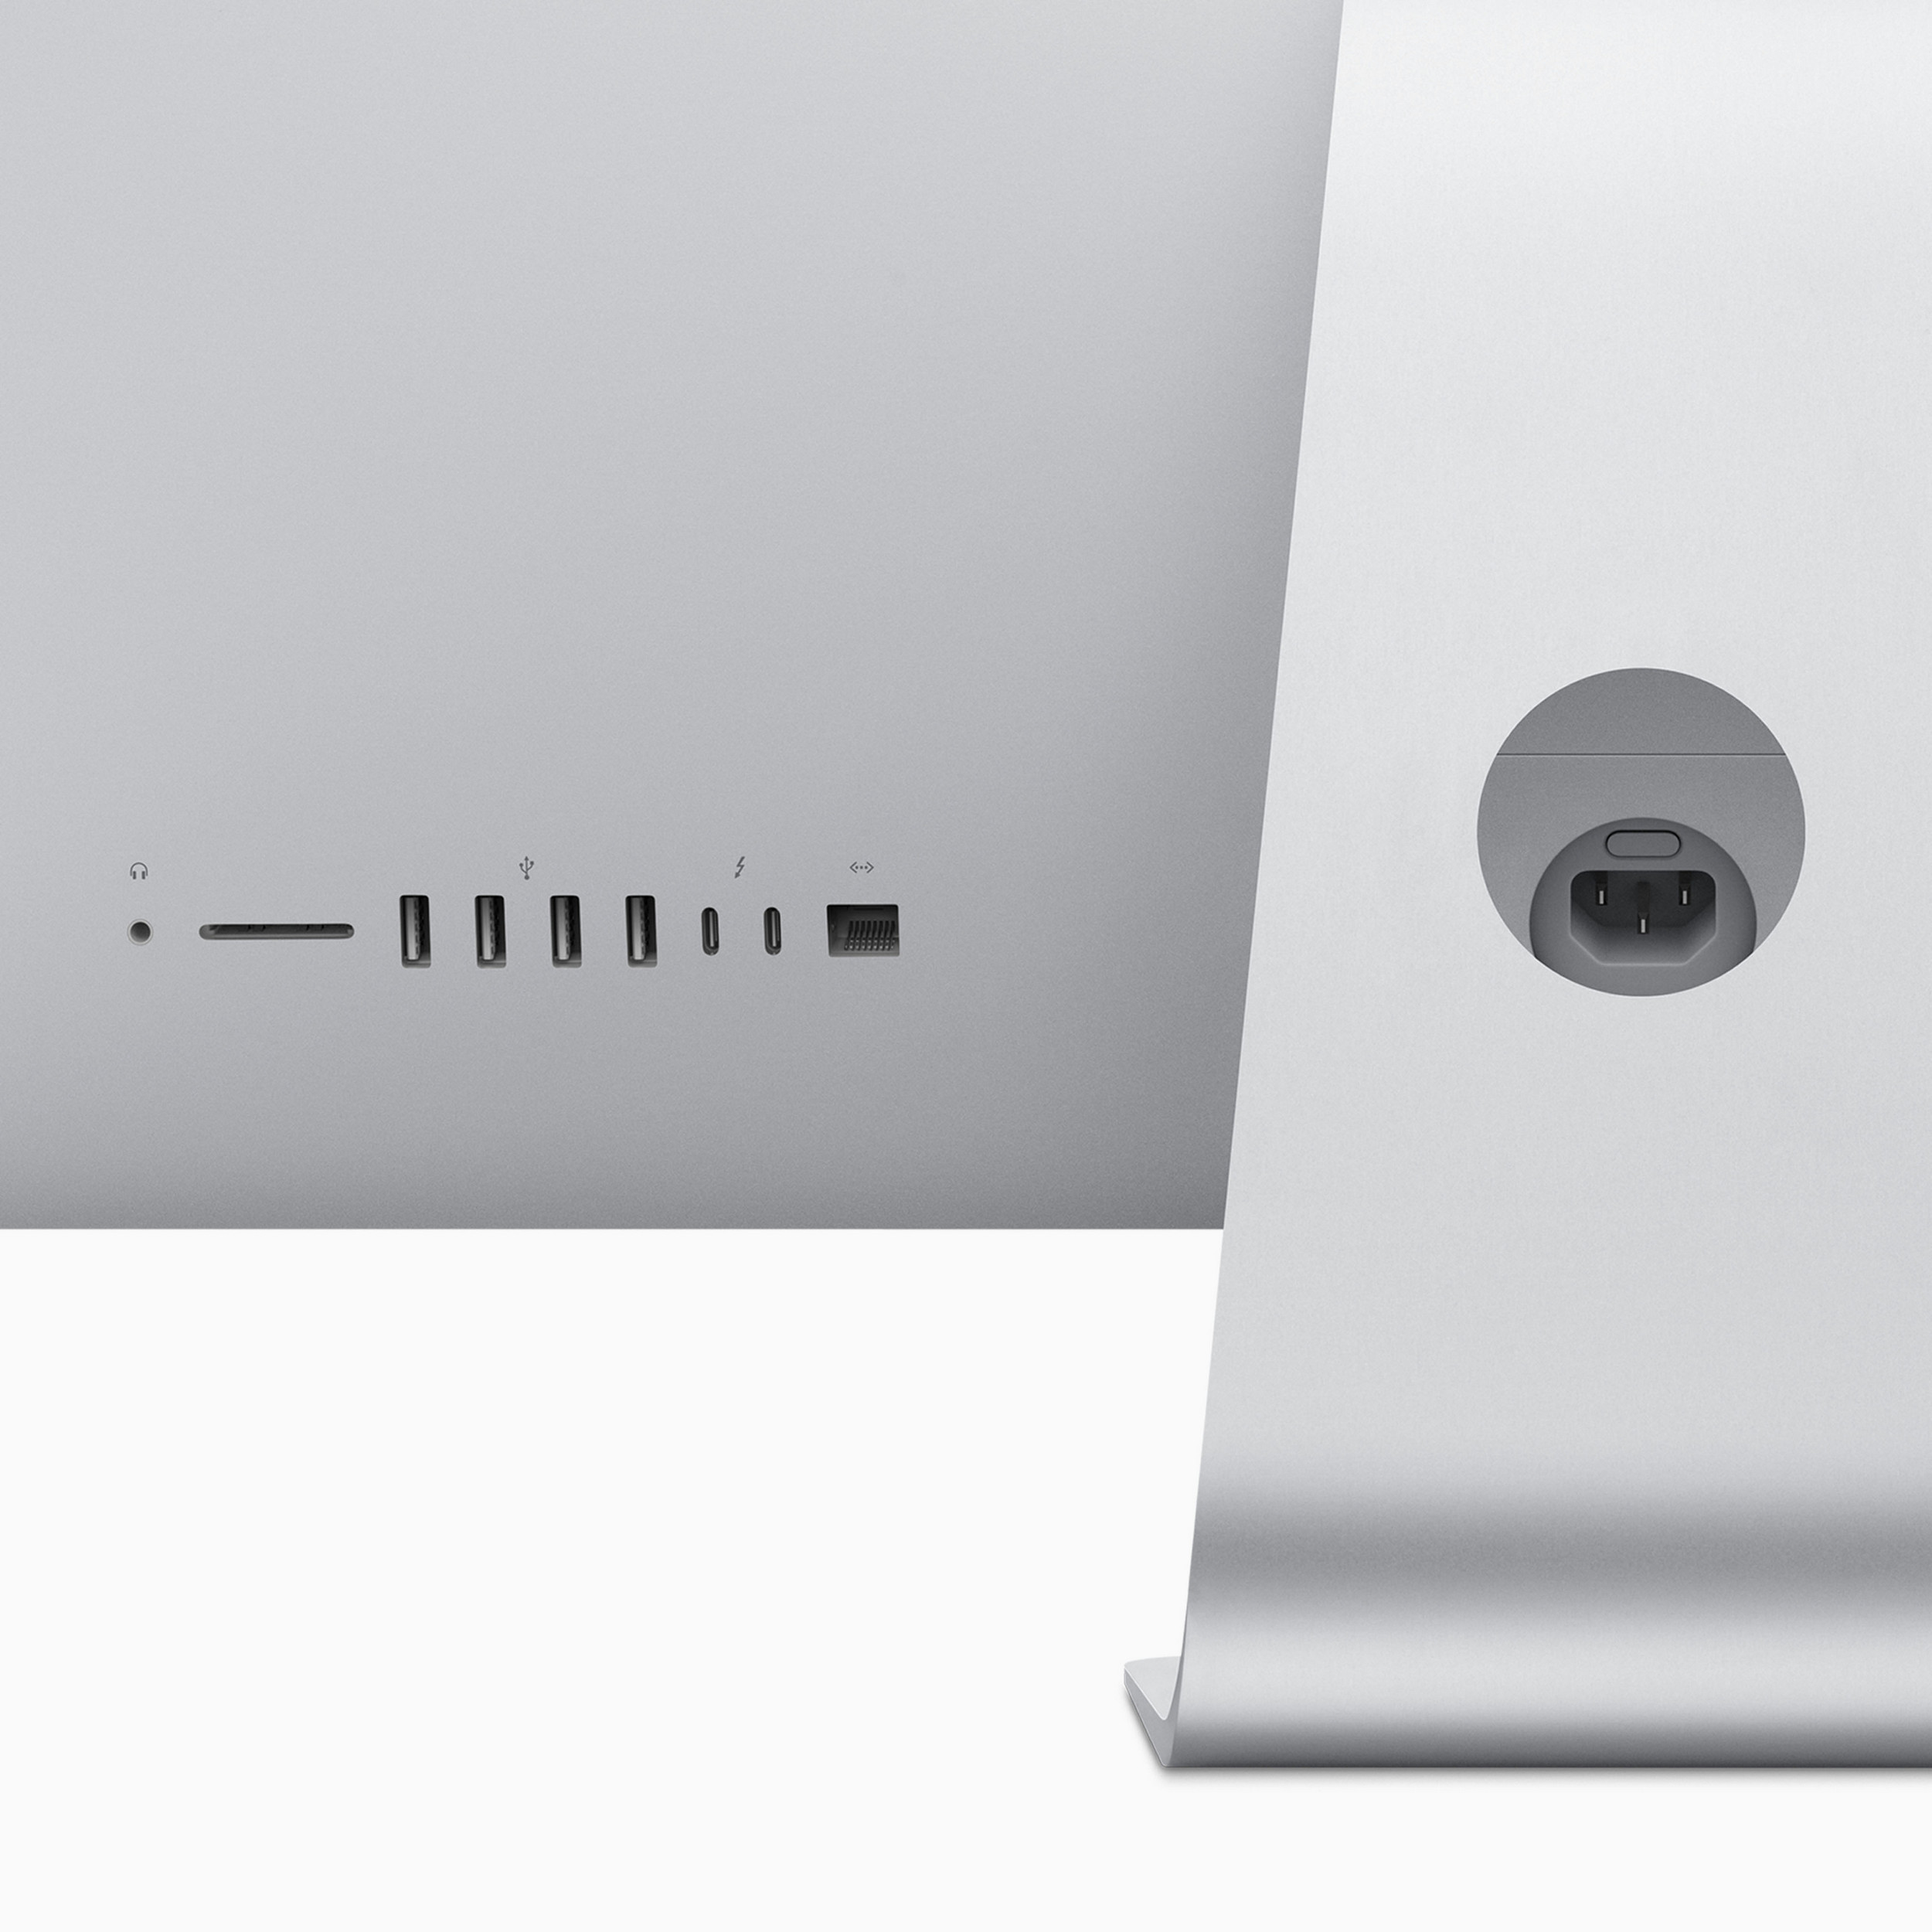 Моноблок Apple iMac 27 Retina 5K 8GB MK462, White